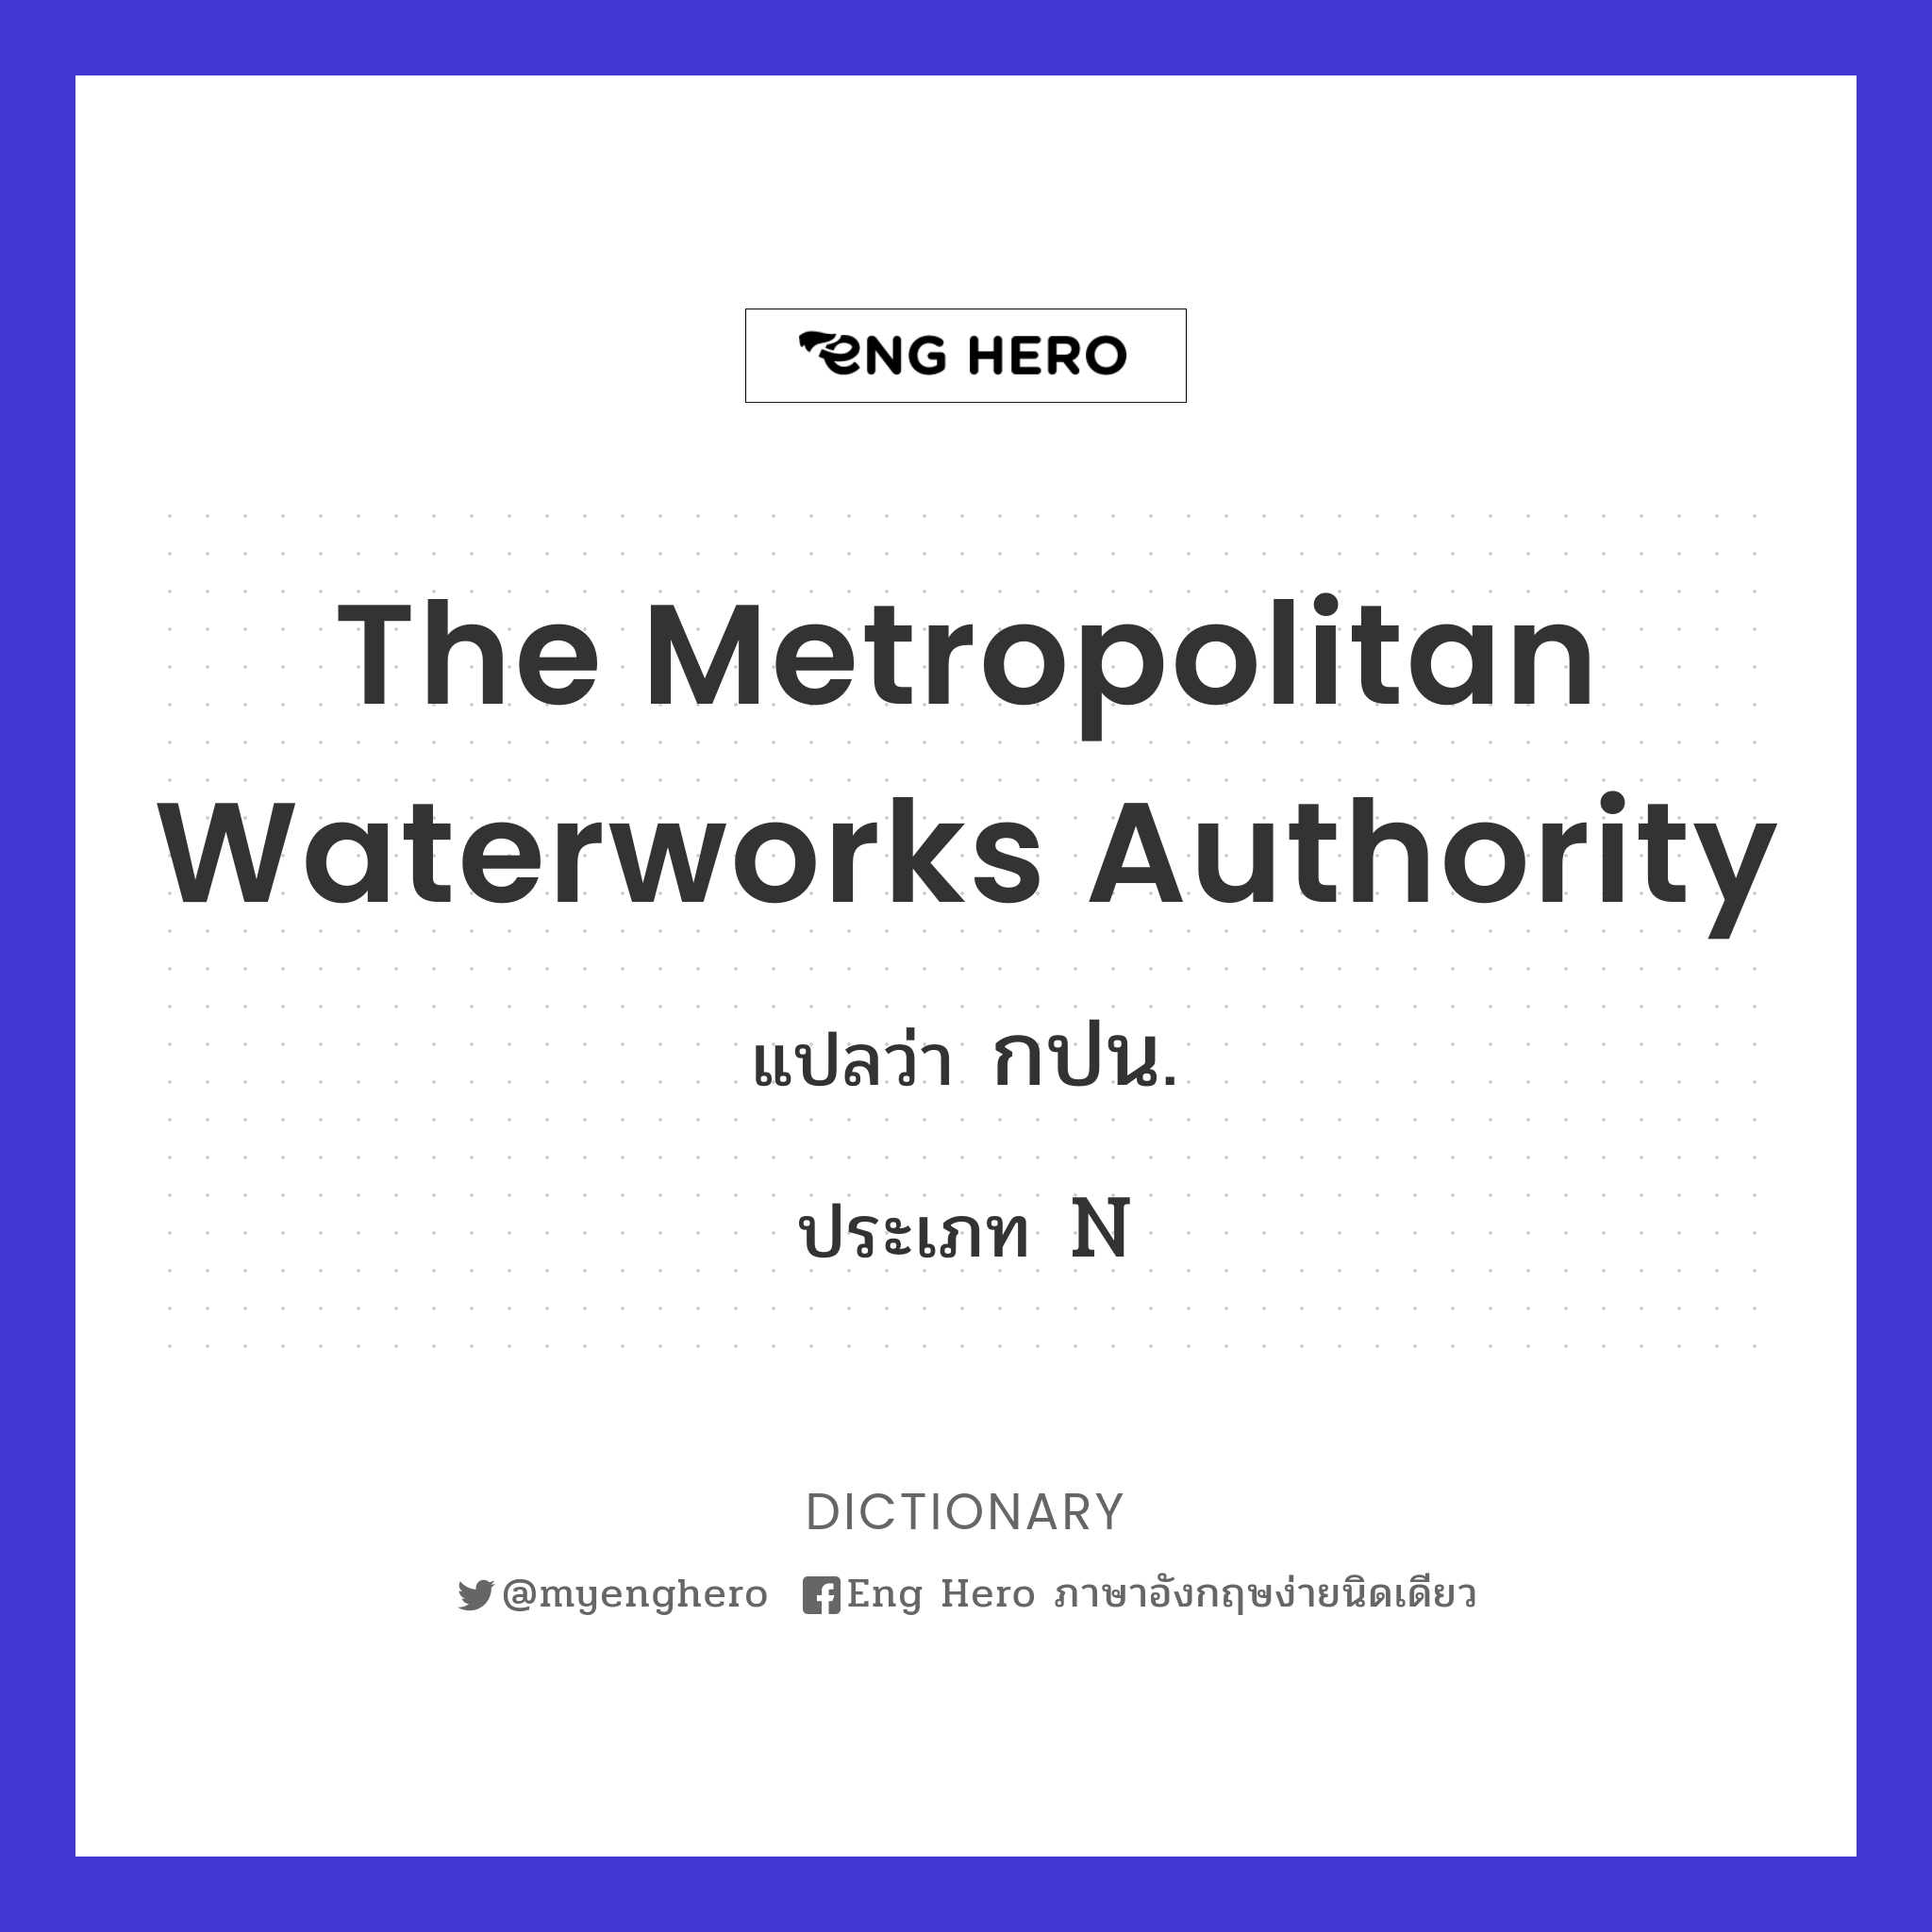 The Metropolitan Waterworks Authority